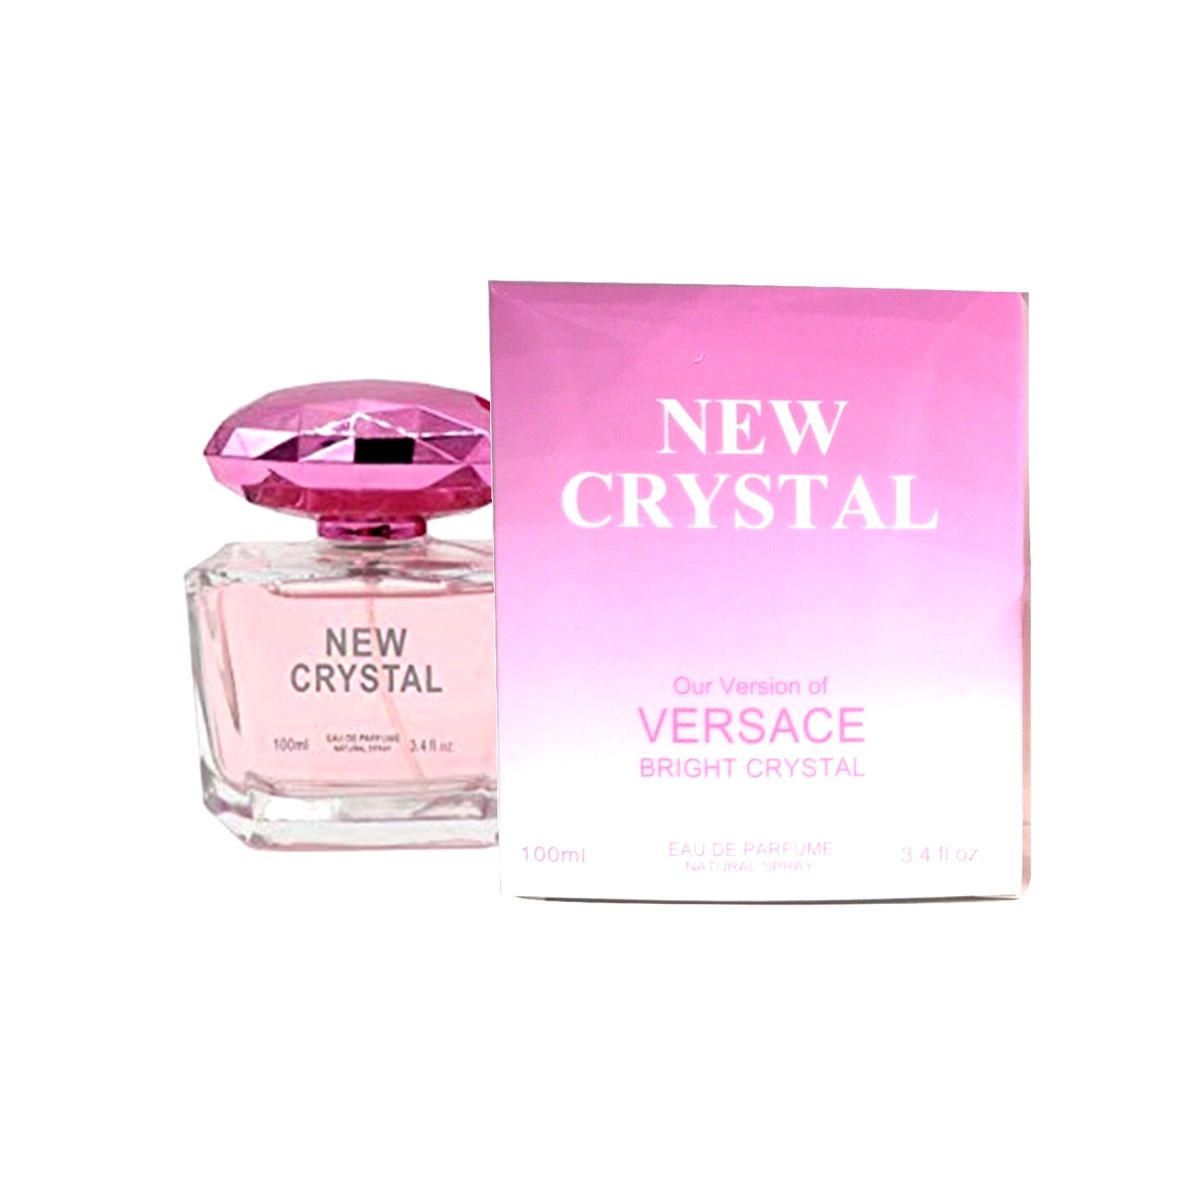 New Chrystal- Bright Crystal by Versace, Alternative, Impression